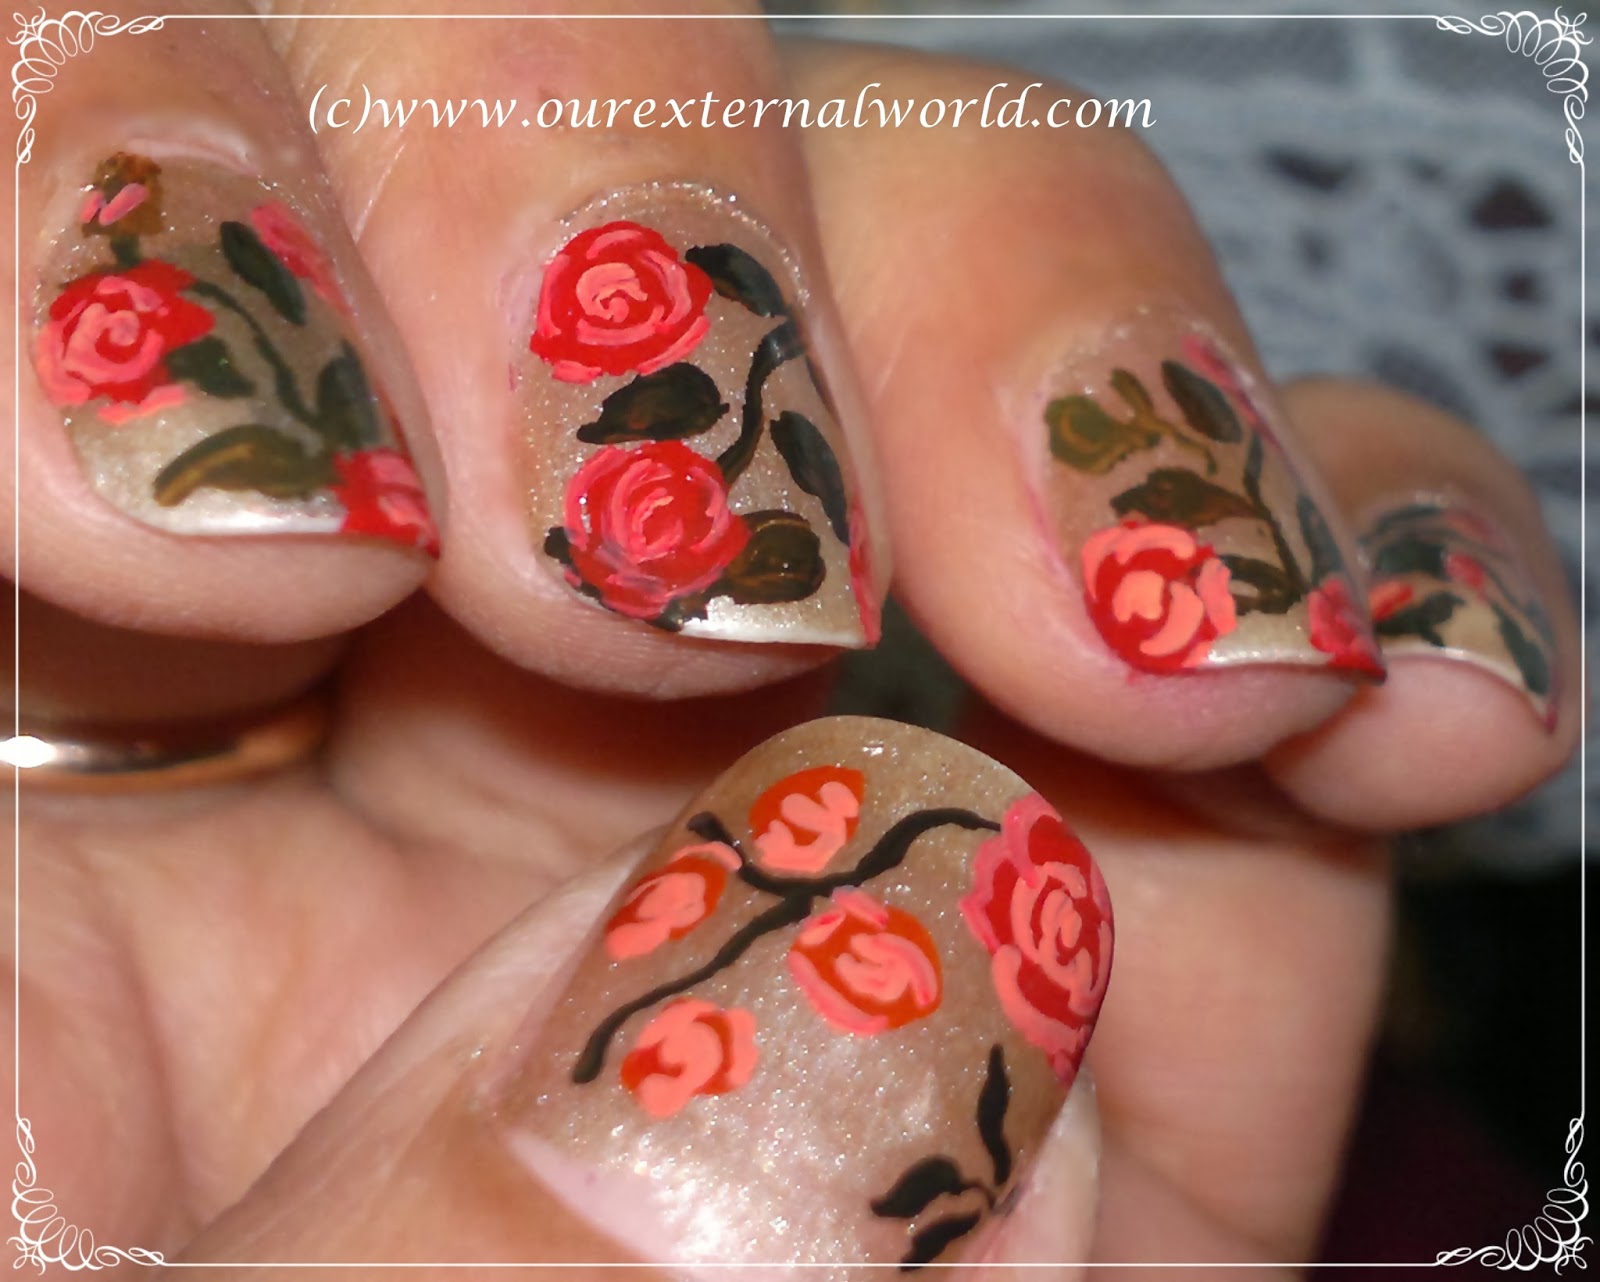 10. Vintage Rose Nail Designs - wide 9